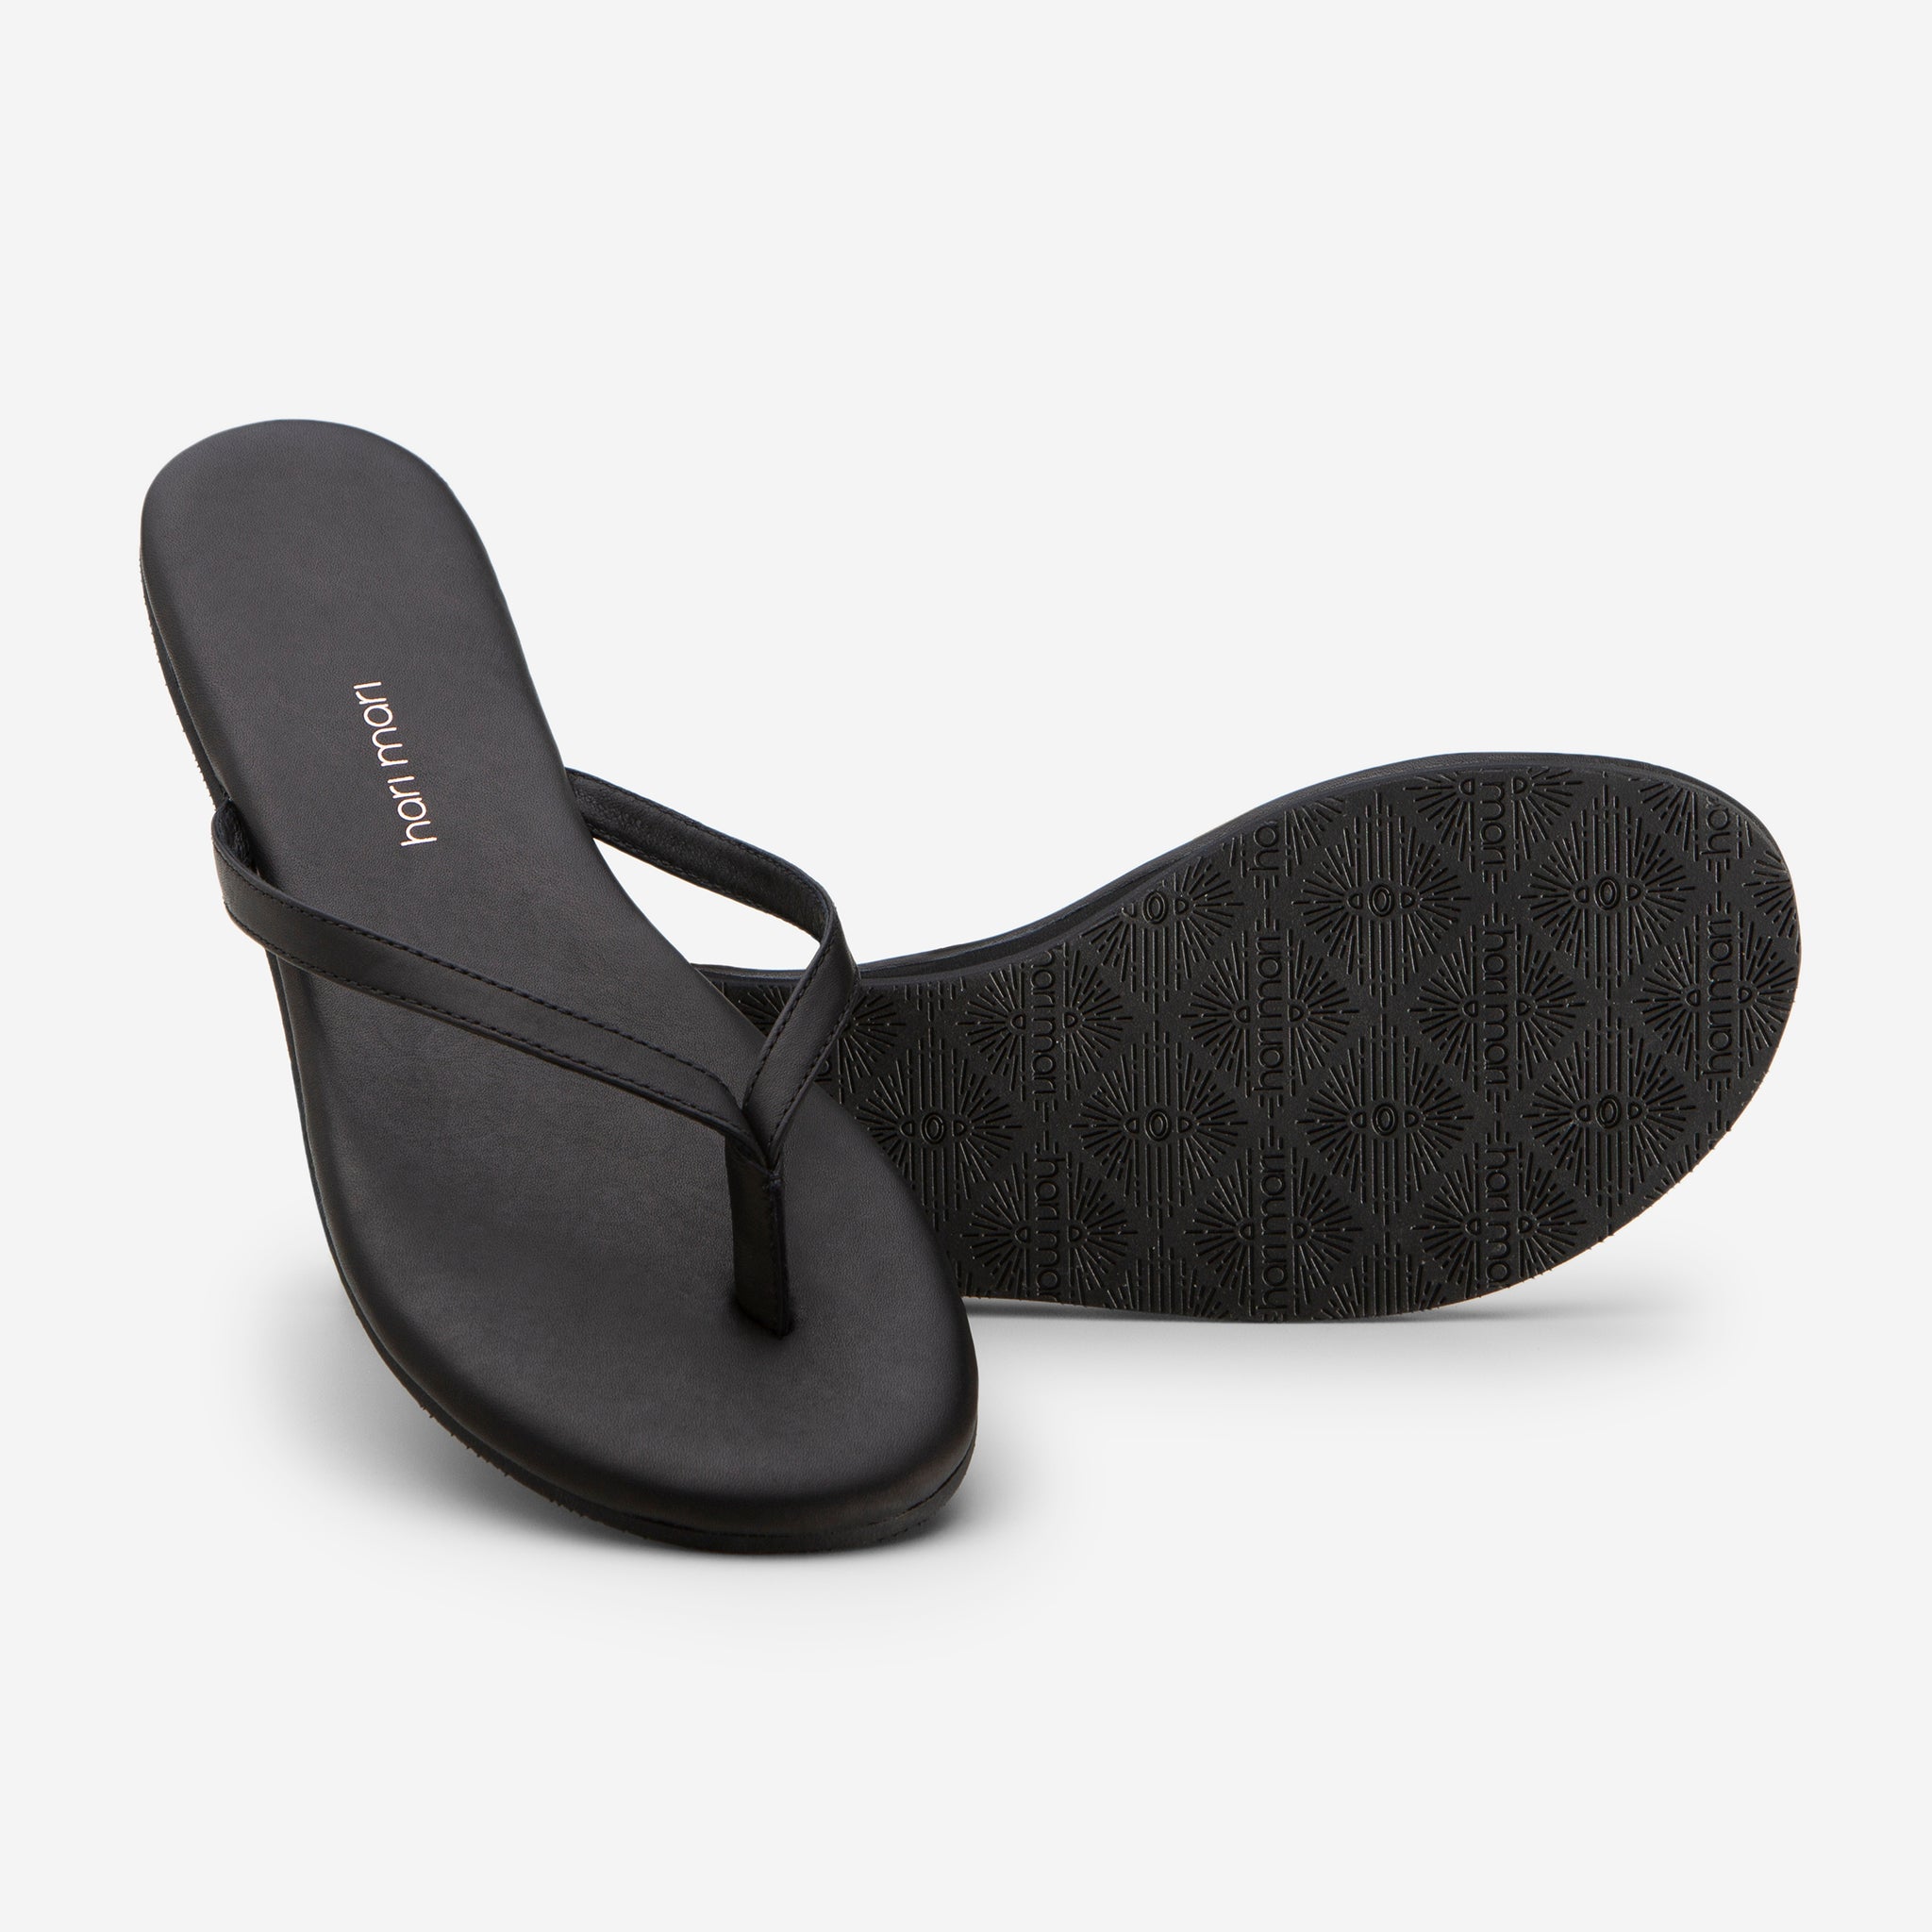  KuaiLu Men's Yoga Mat Leather Flip Flops Thong Sandals with  Arch Support | Sandals